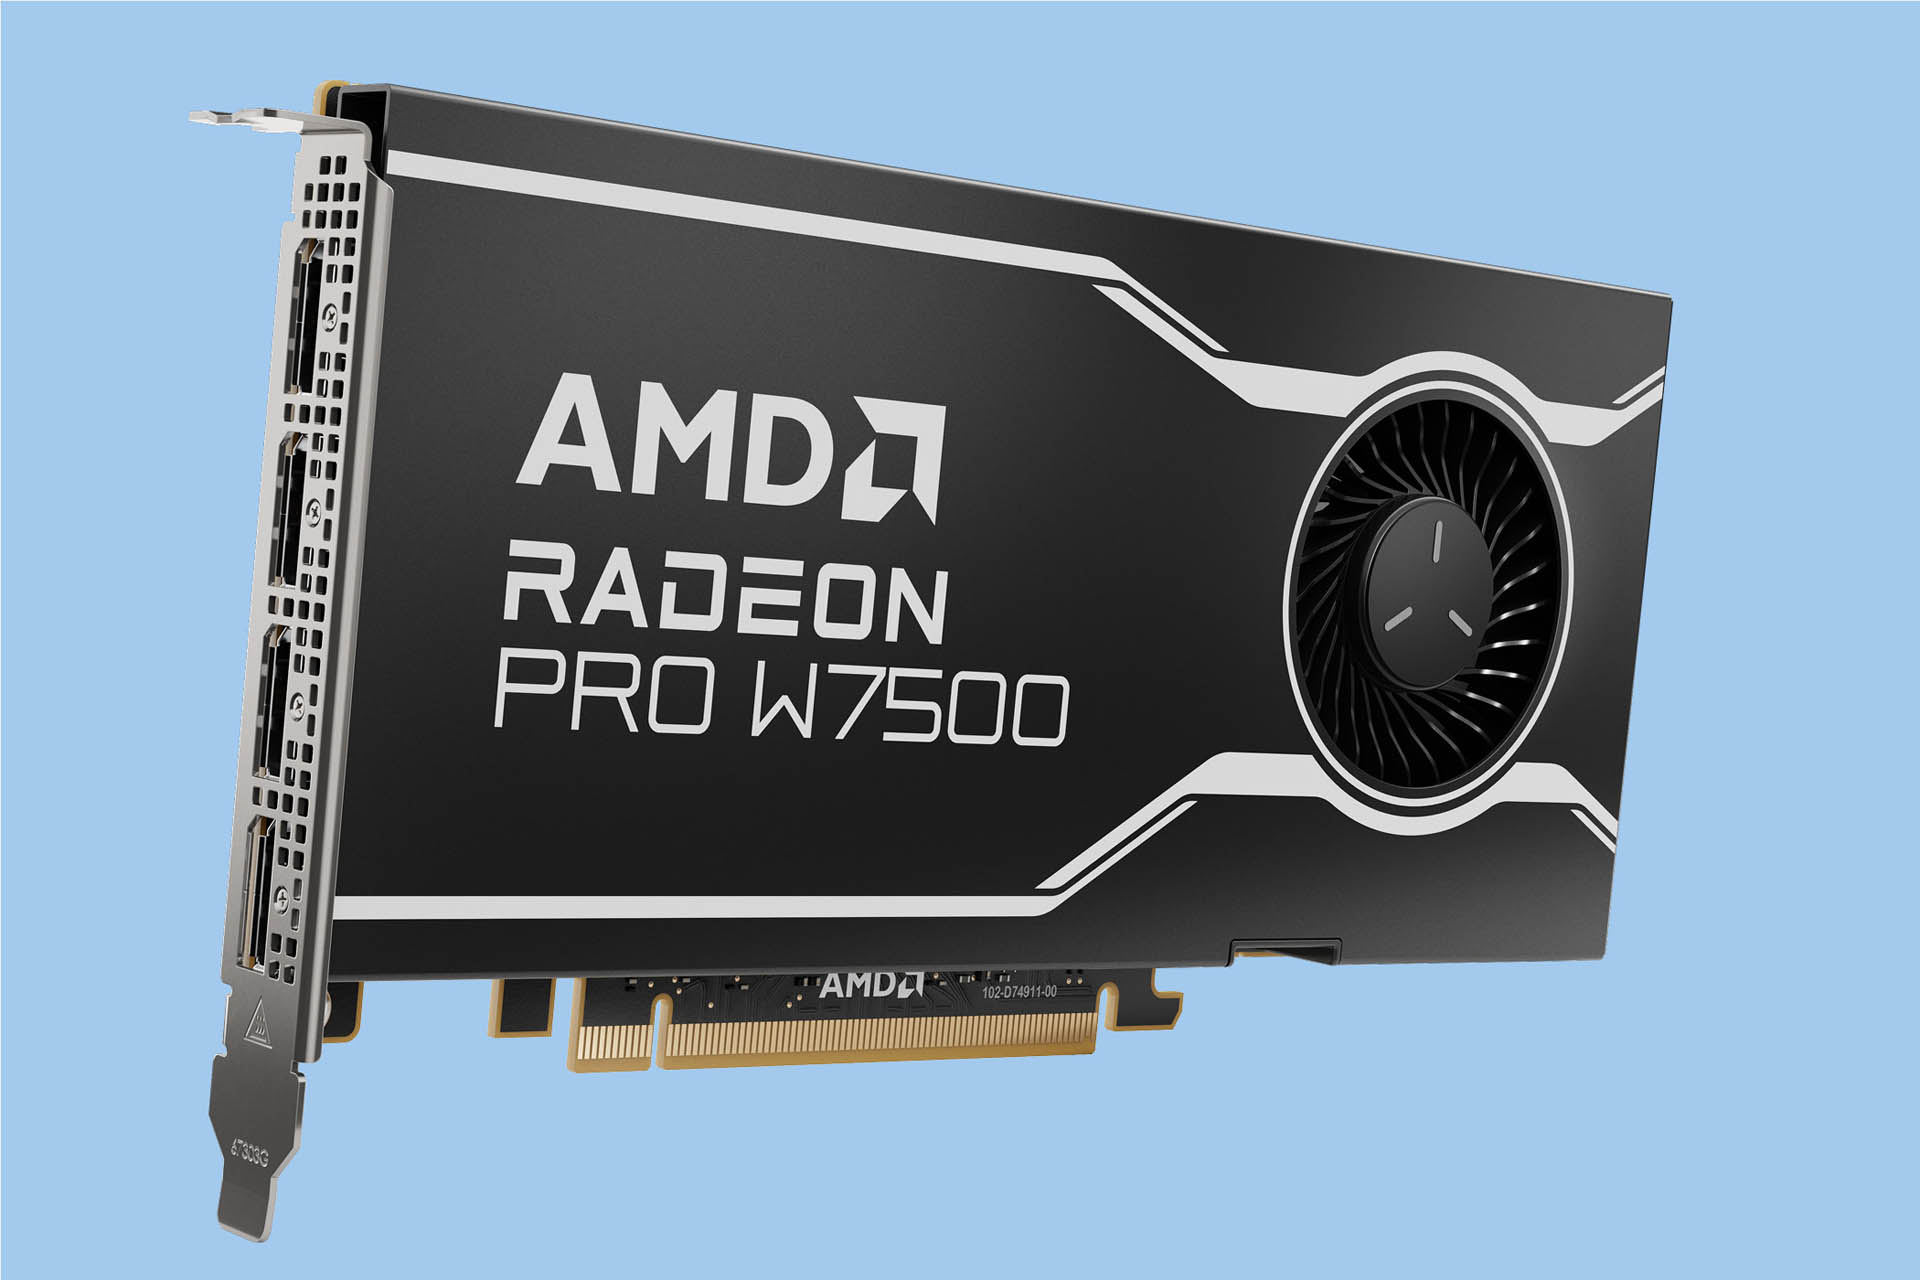 AMD Radeon PRO W7500 